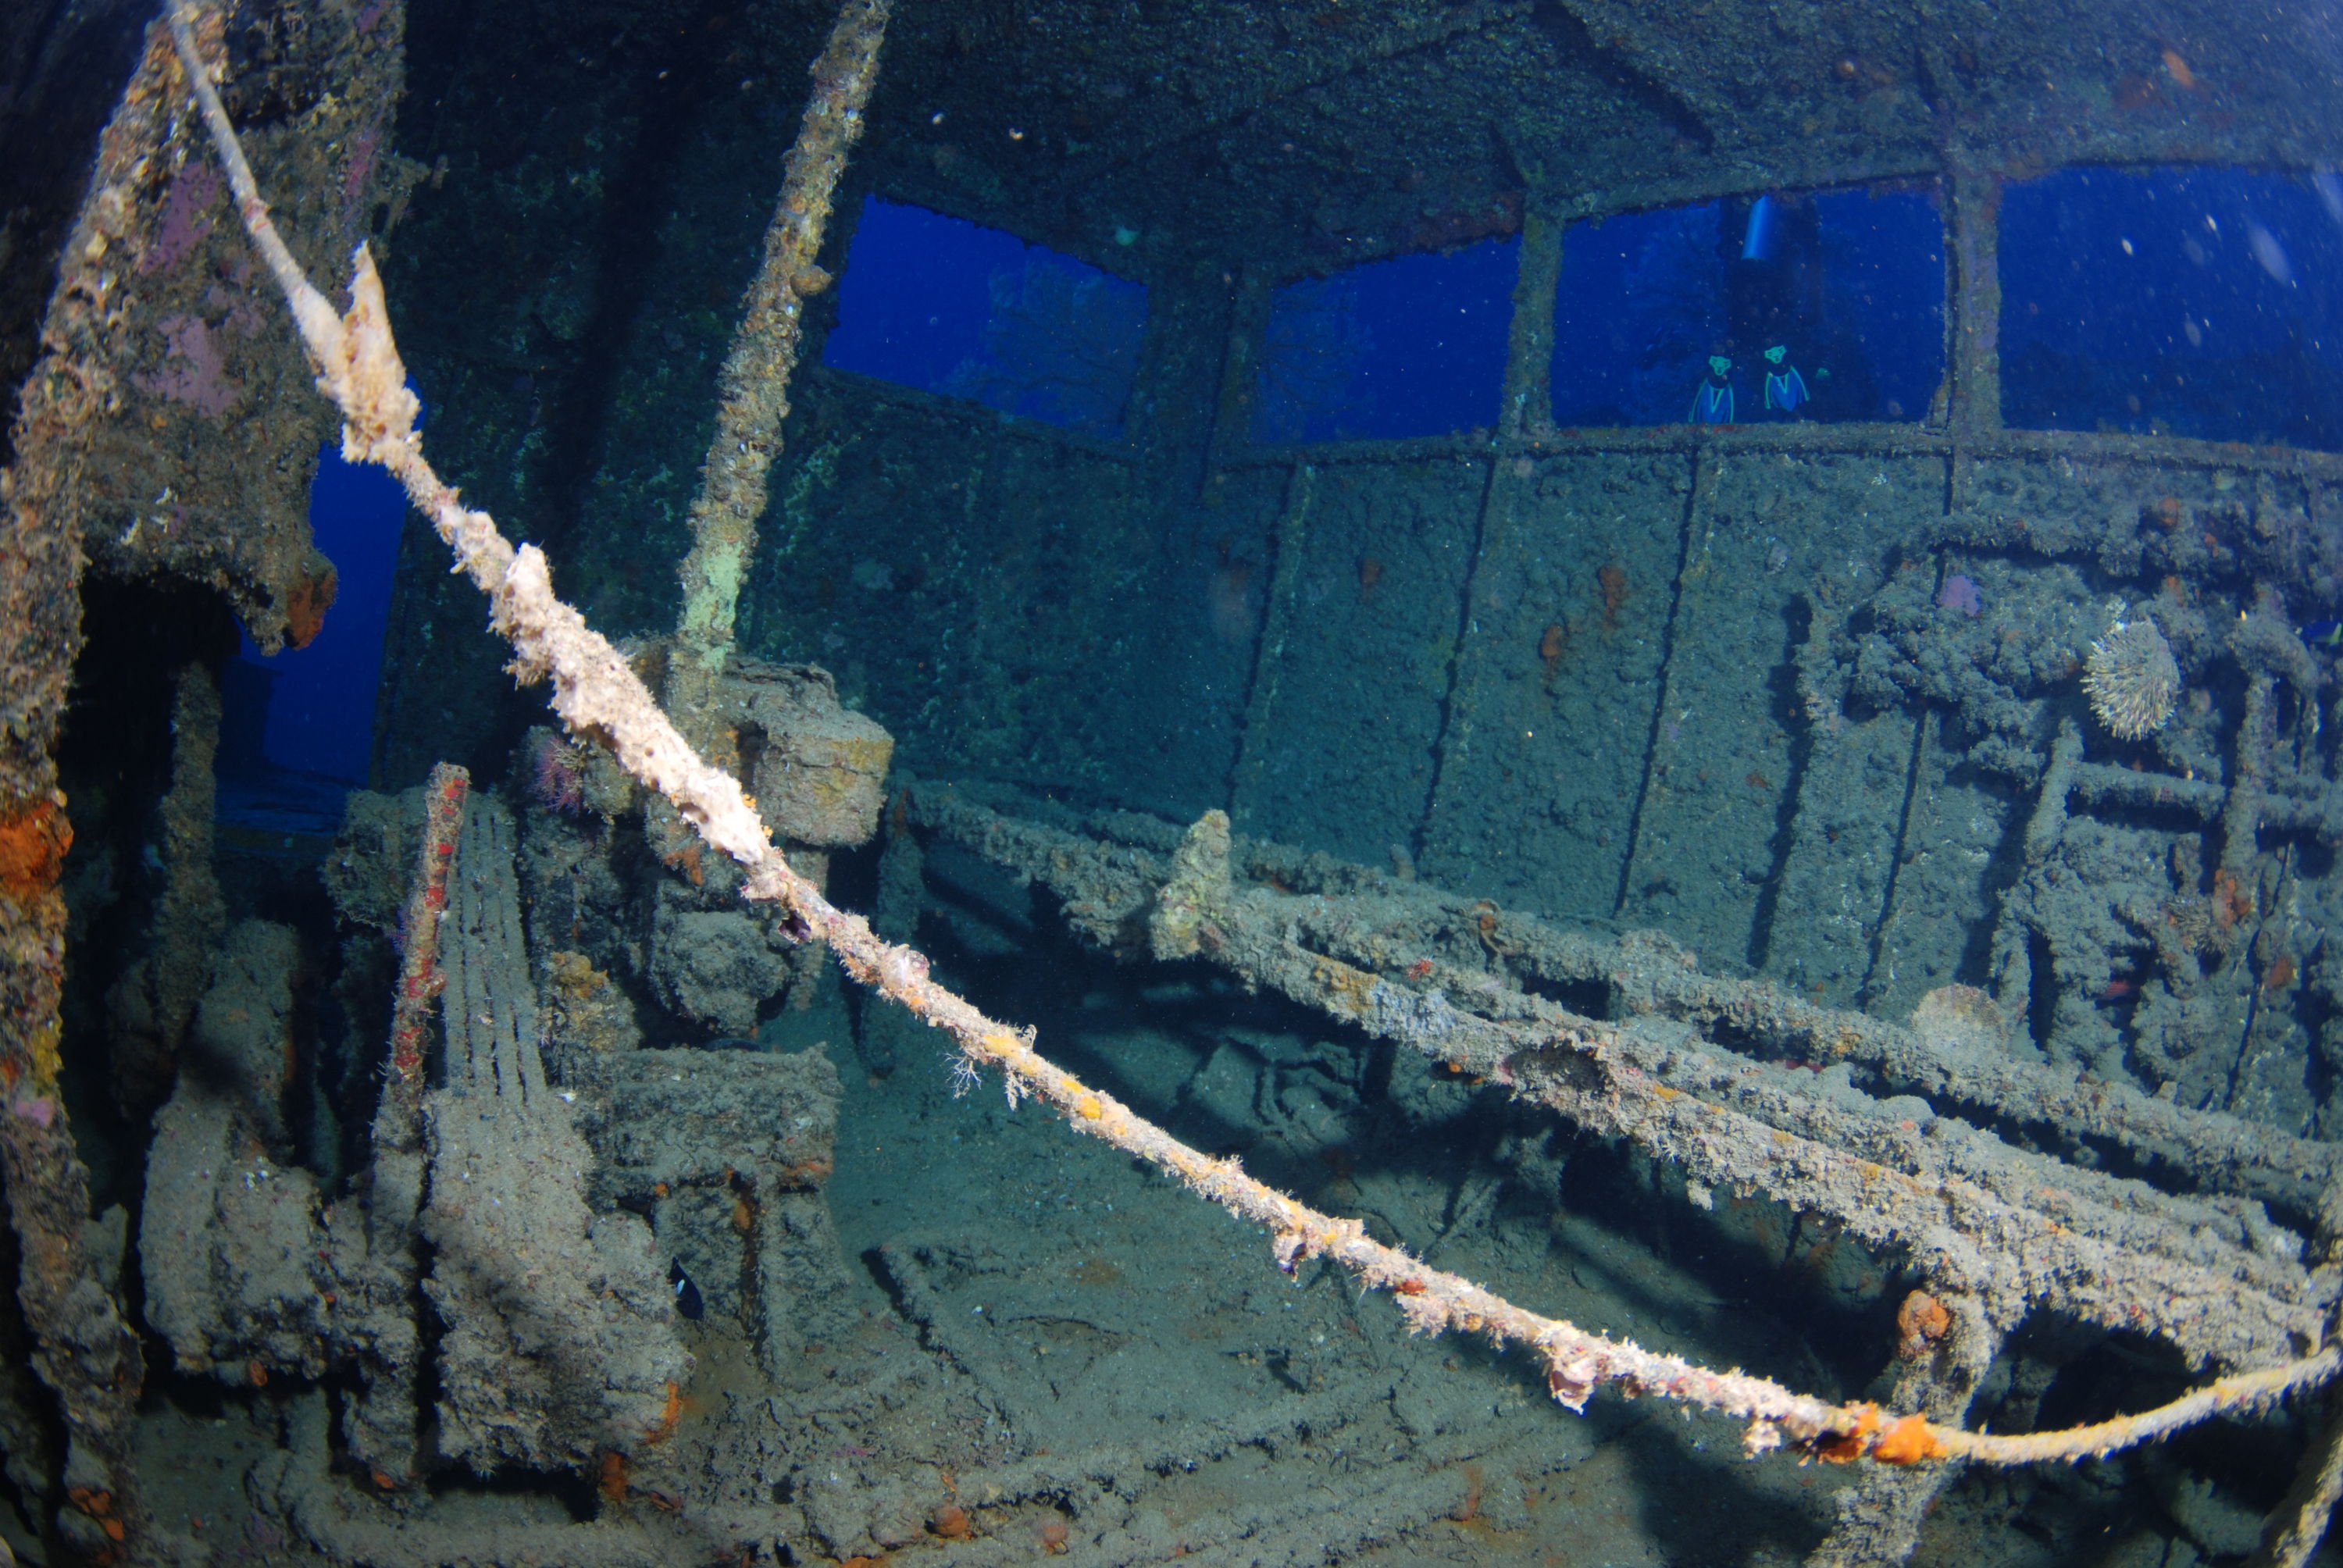 Inside the Naha Wreck